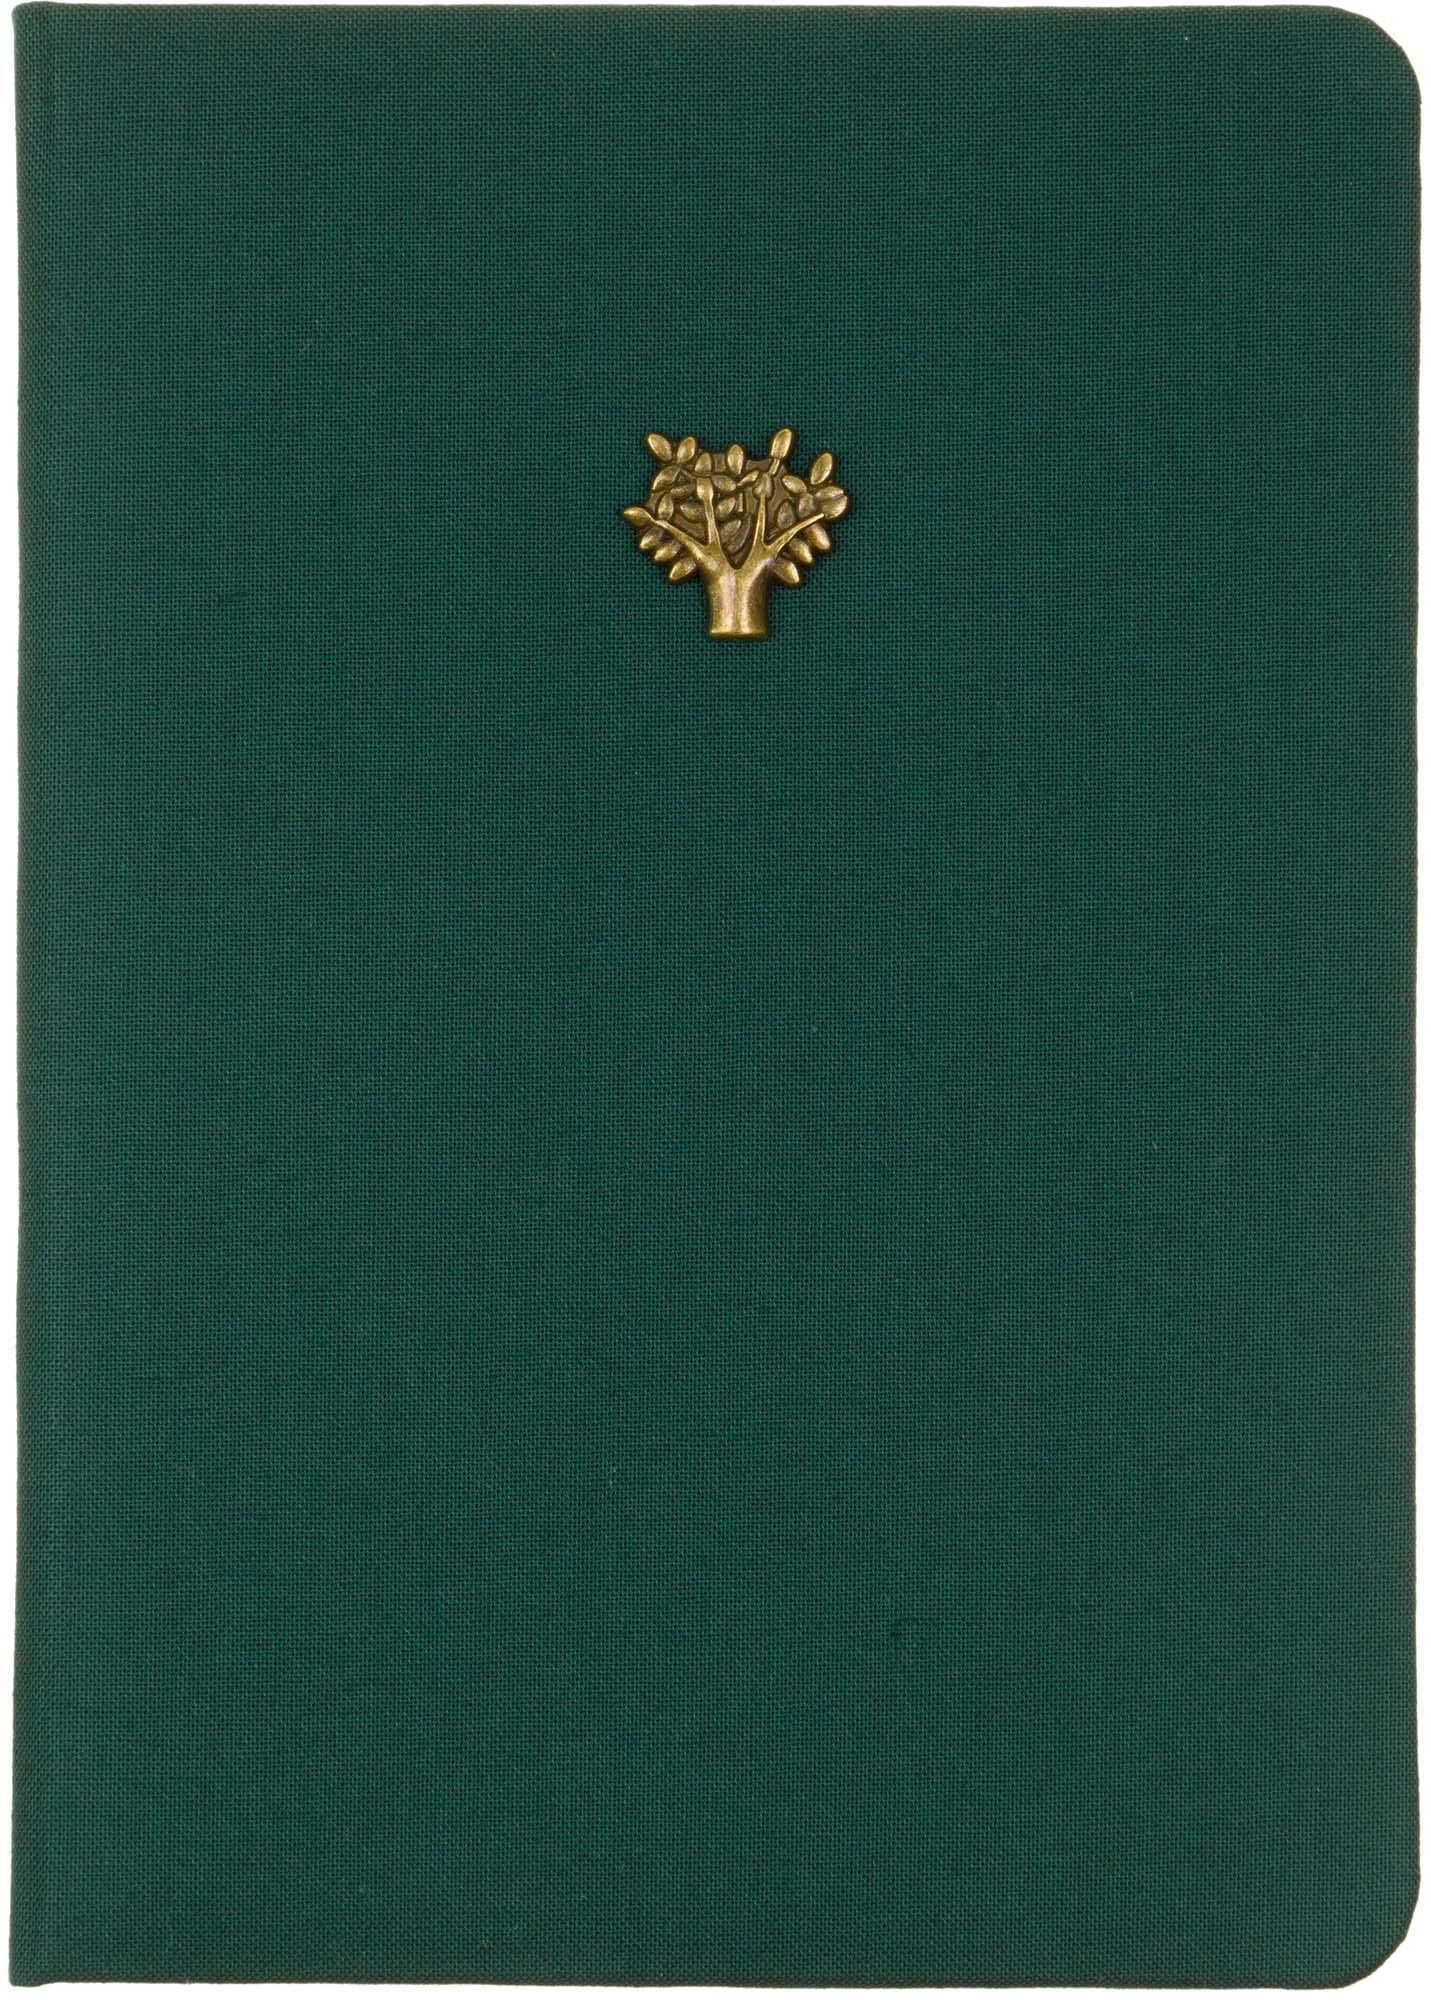 Eccolo Green Tree Emblem Journal